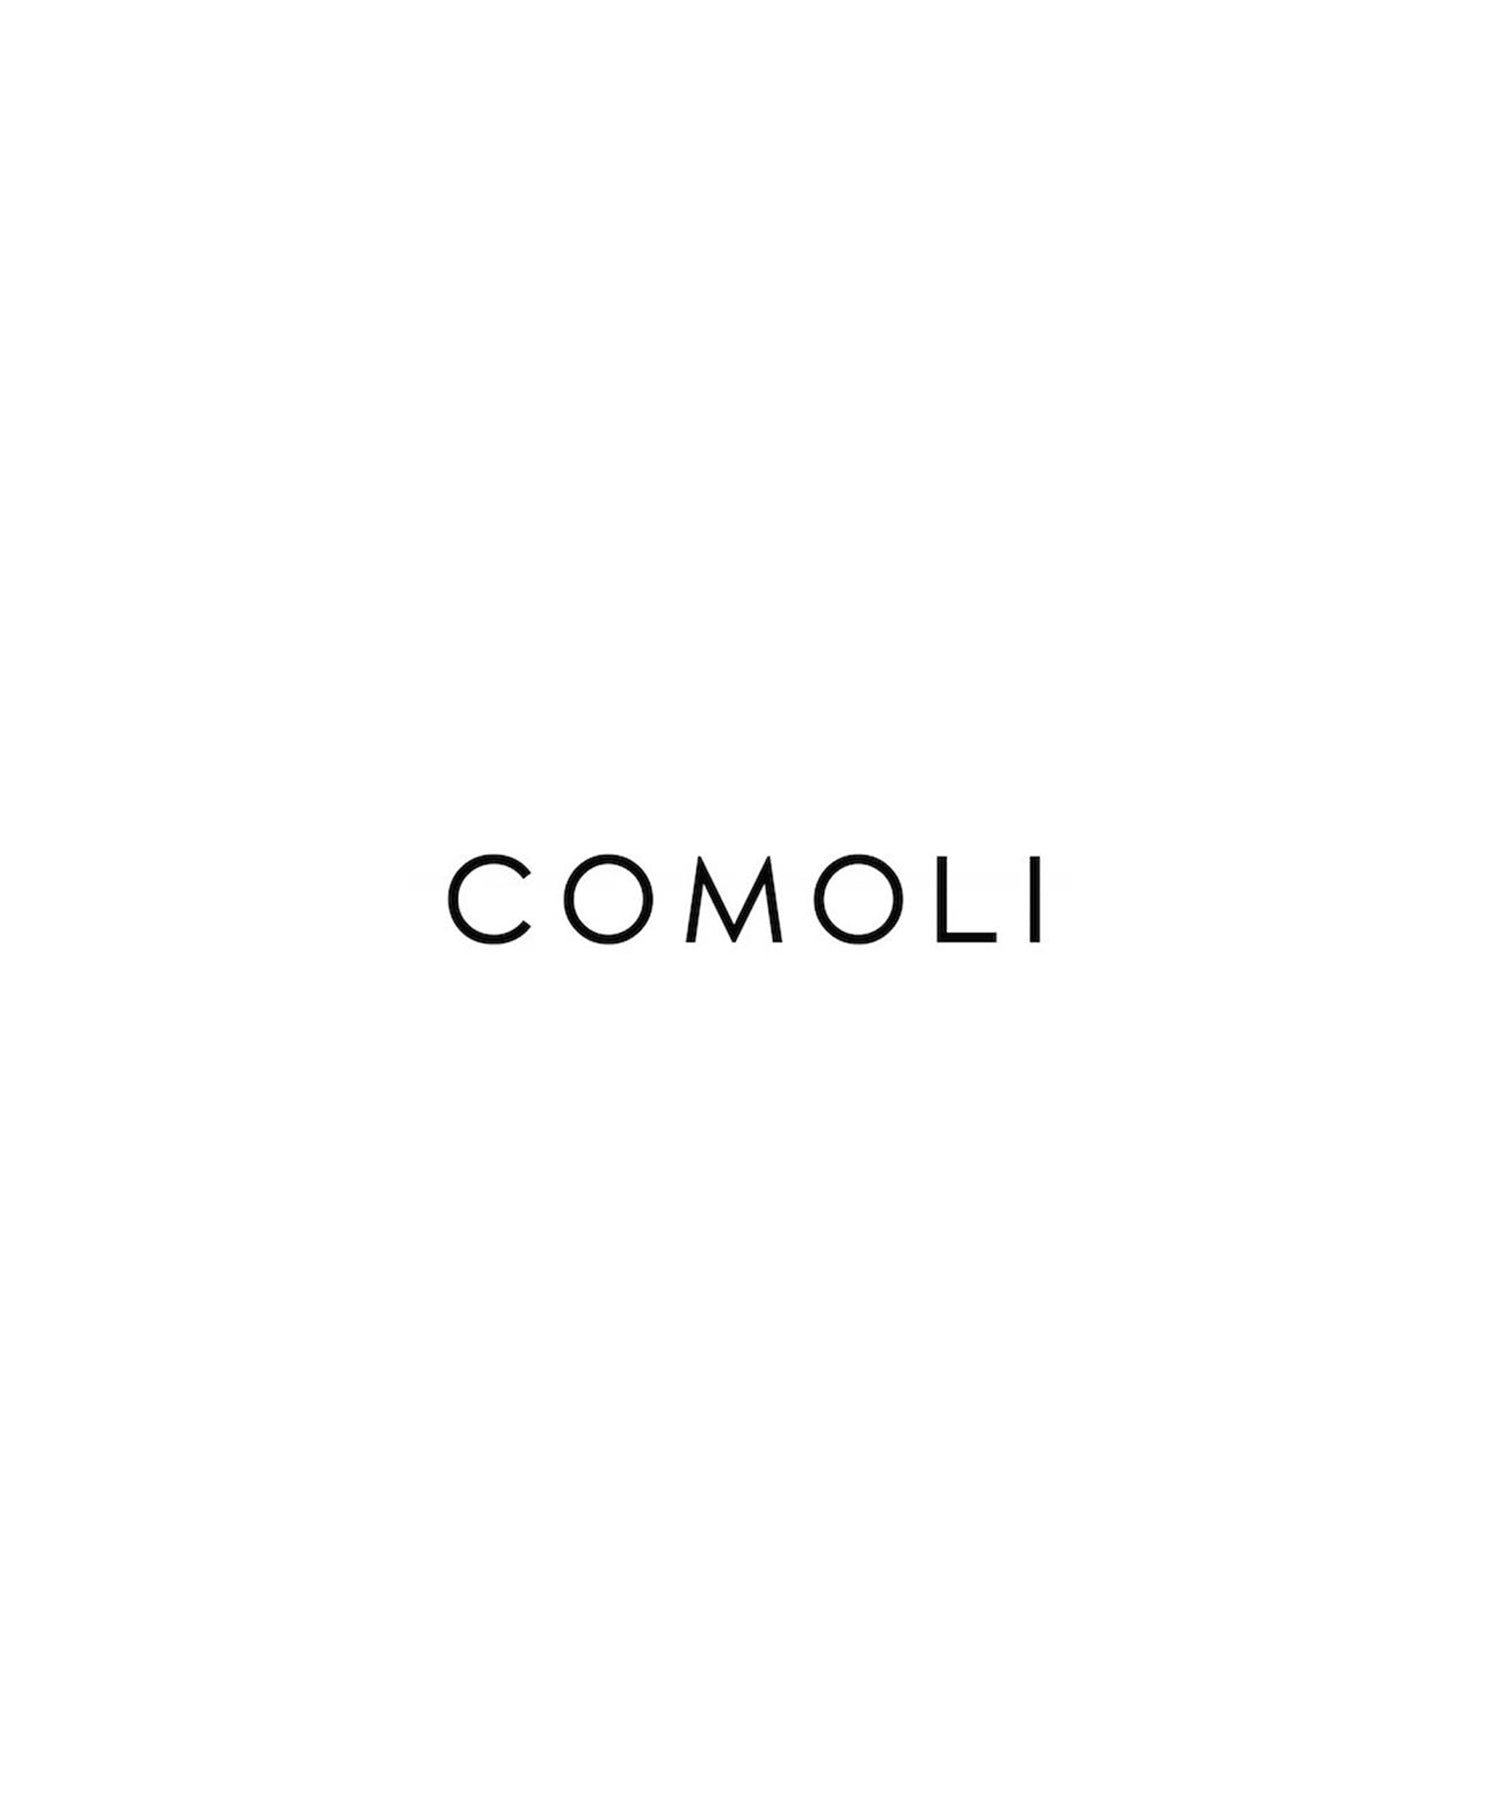 COMOLI 3月2日(土)発売の新作商品